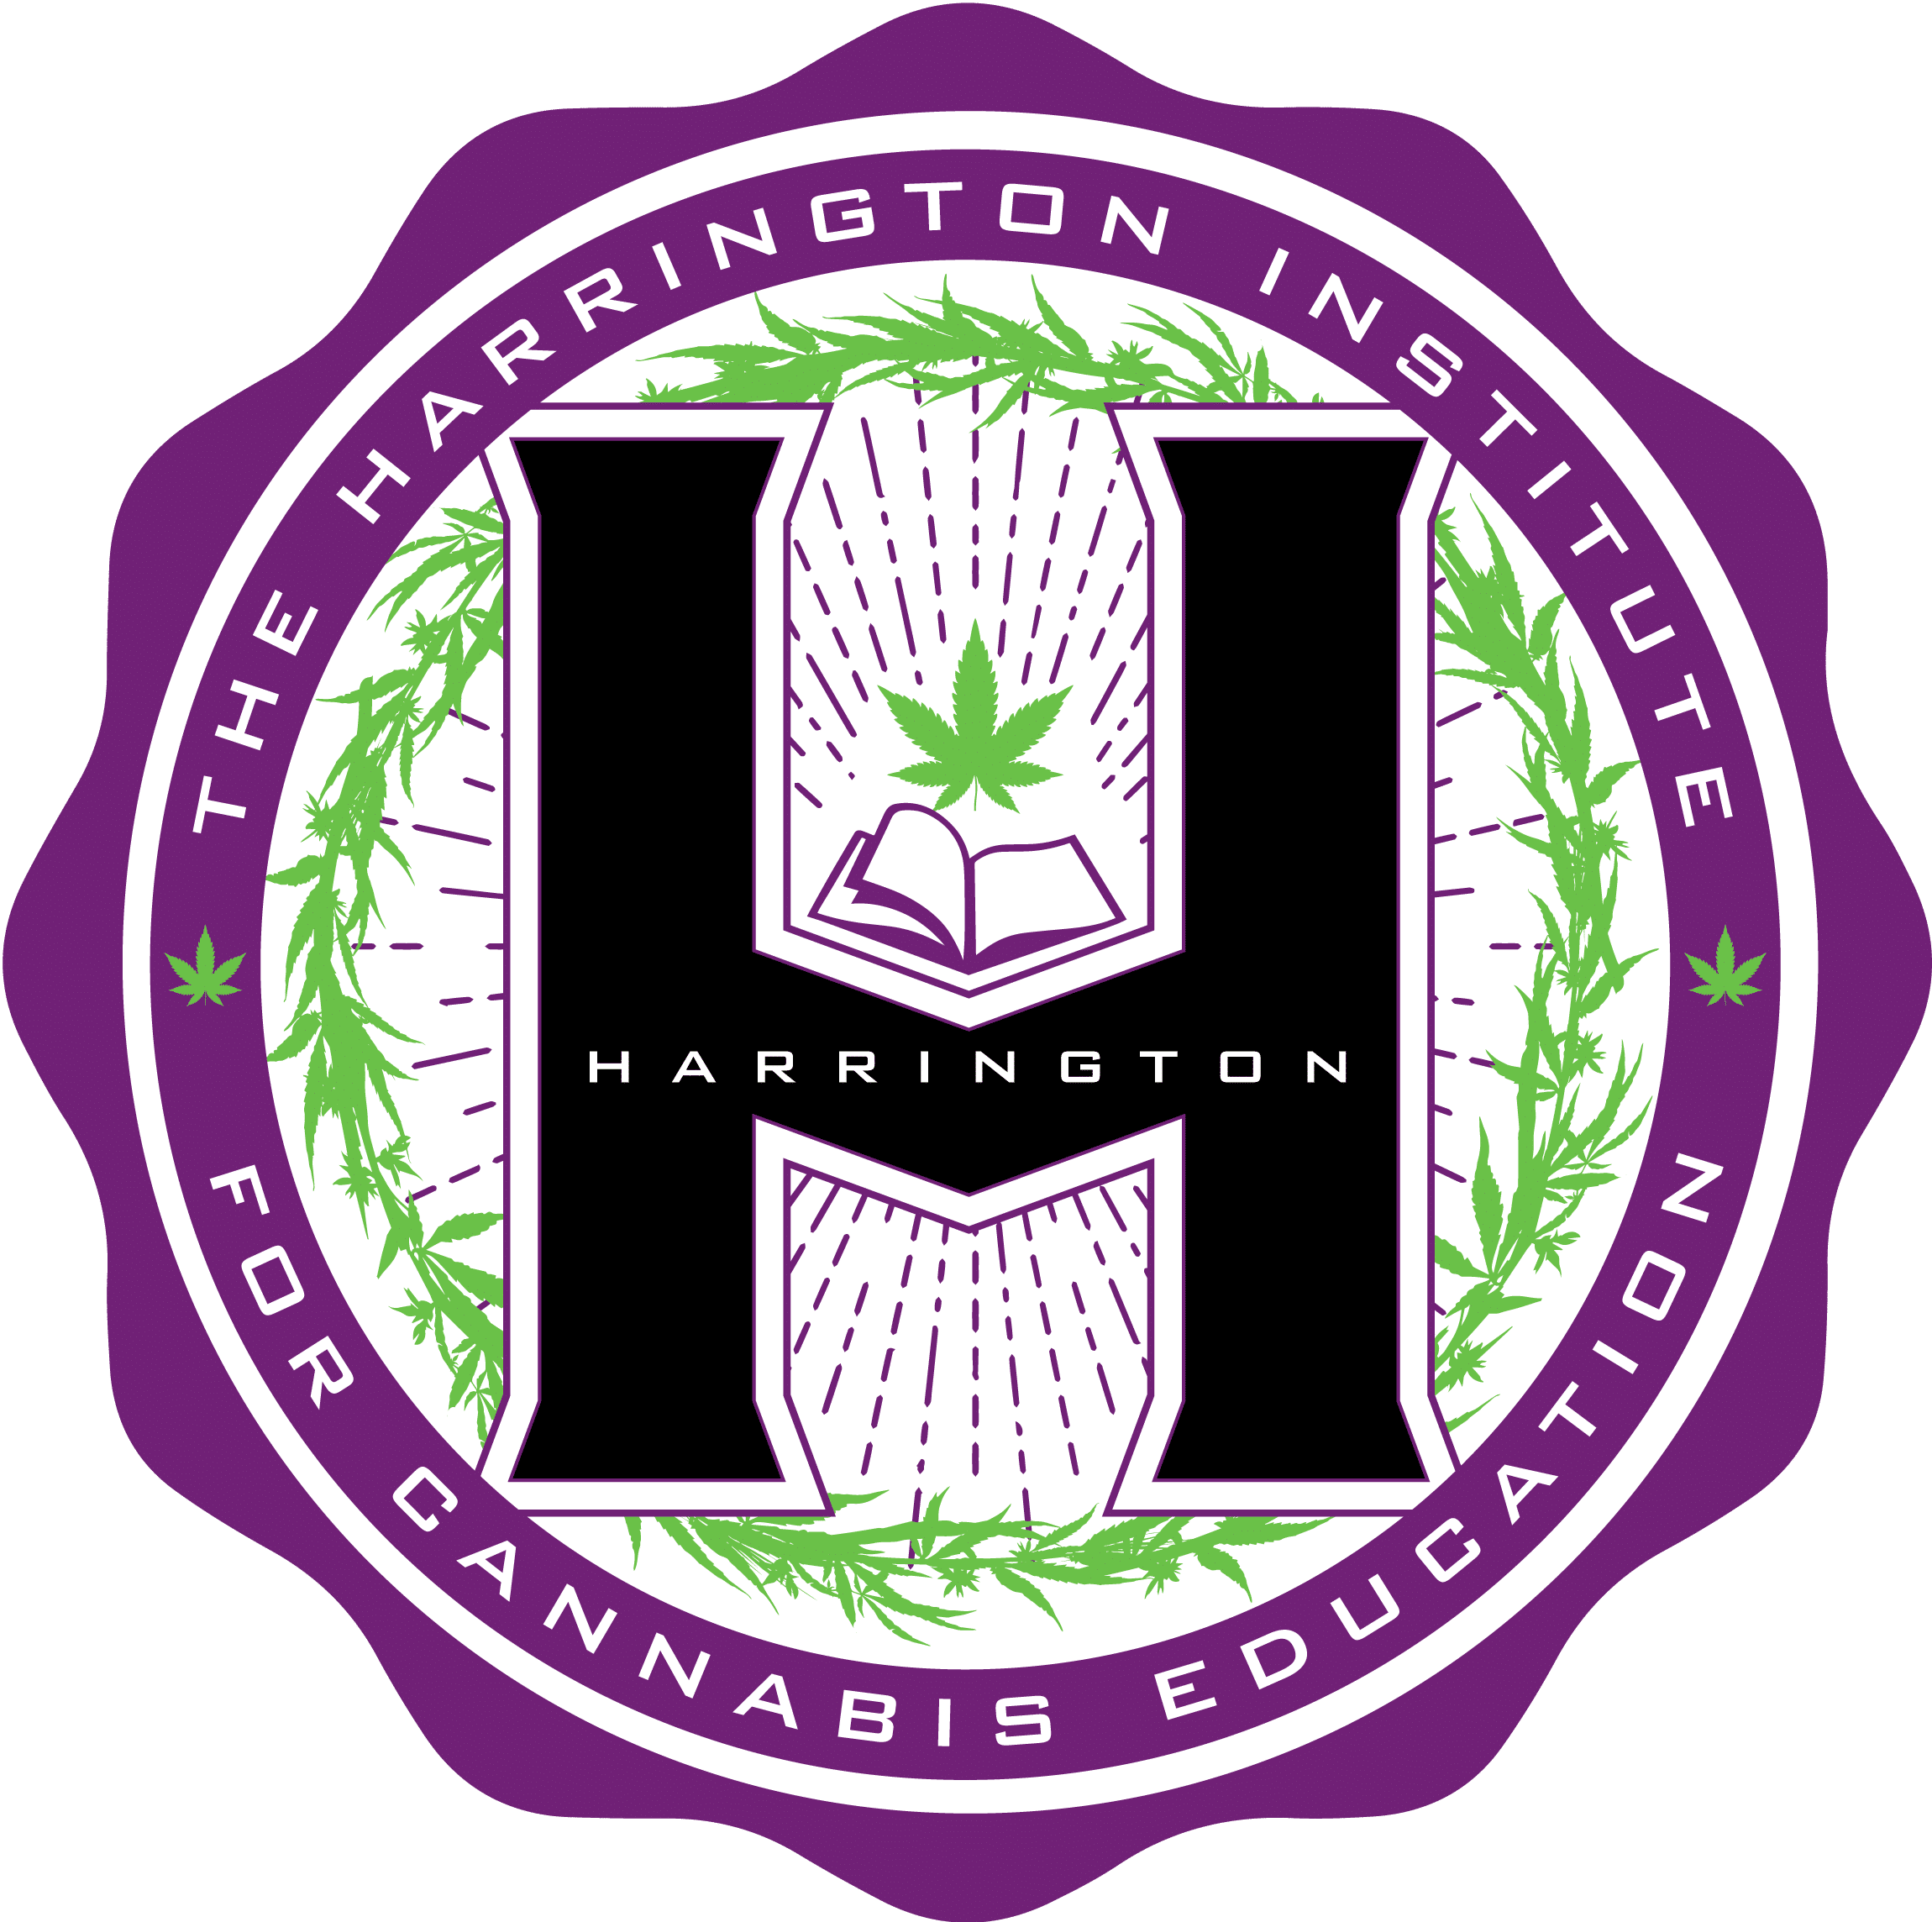 Viola cannabis company starts cannabis education institute